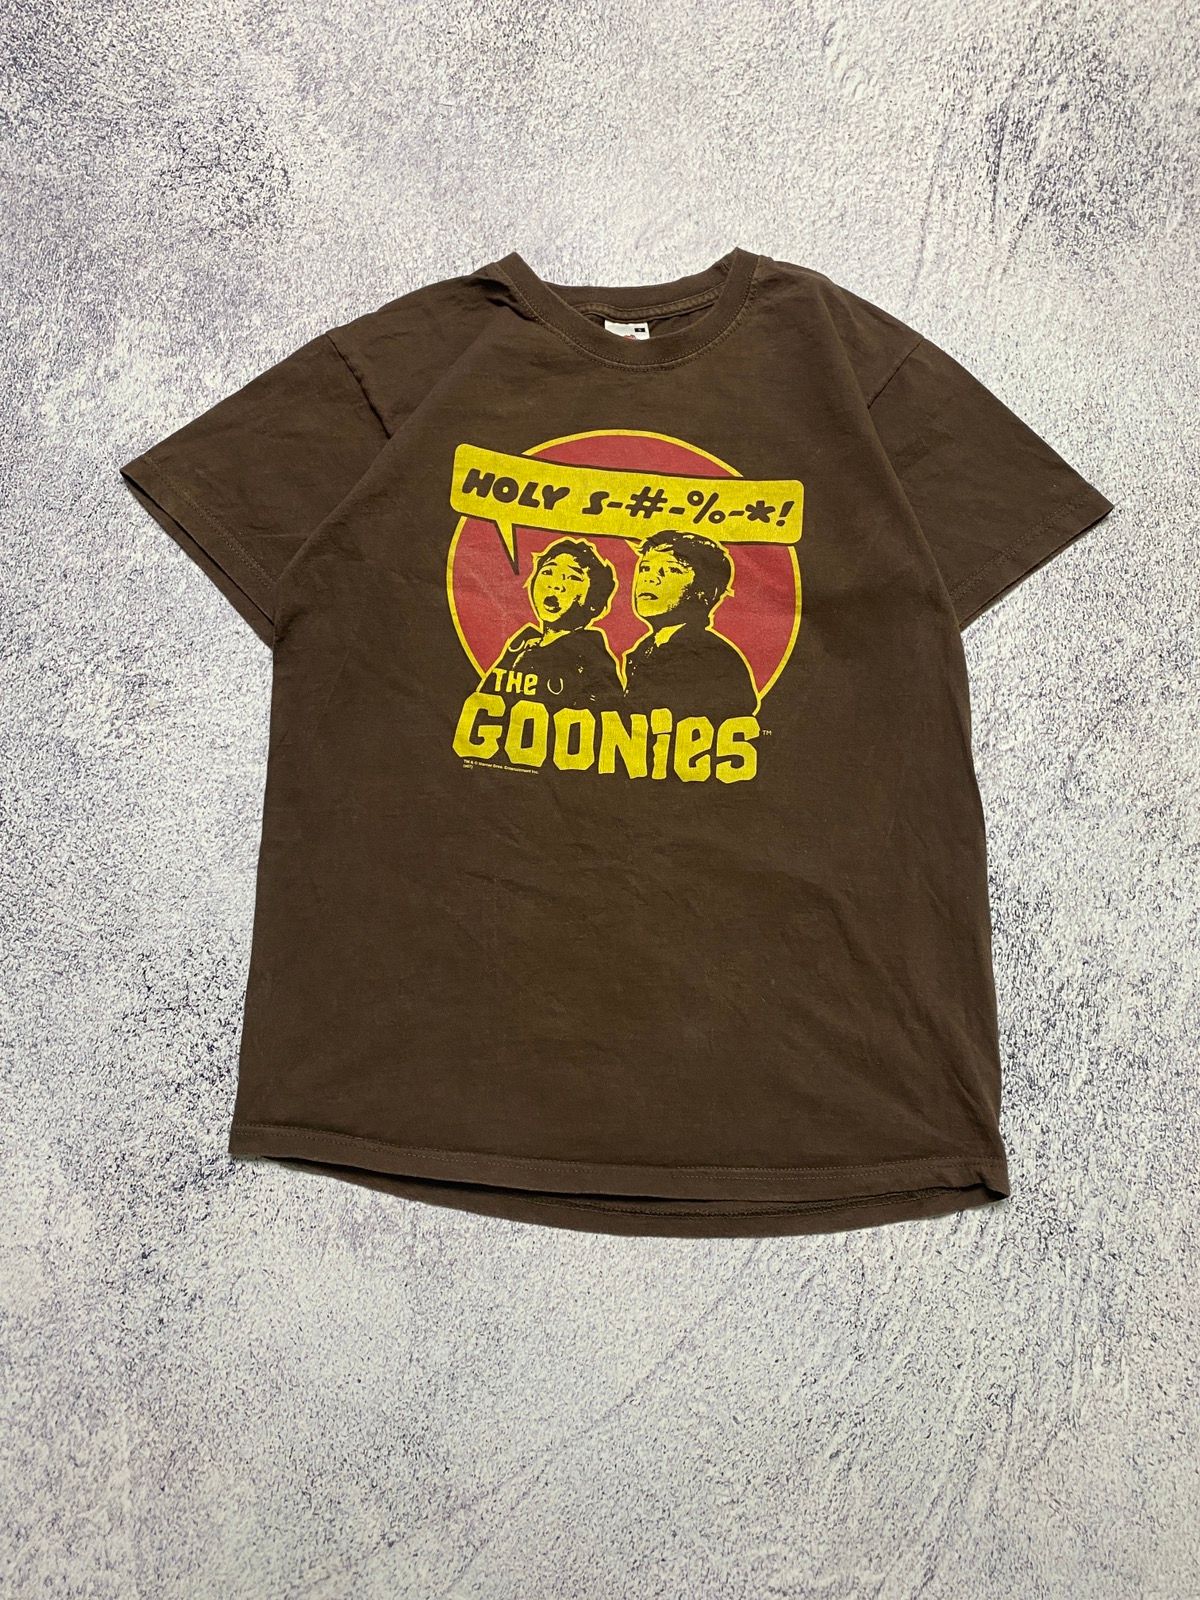 Pre-owned Band Tees X Vintage The Goonies Movie "holly S" Humor T Shirt Y2k In Brown